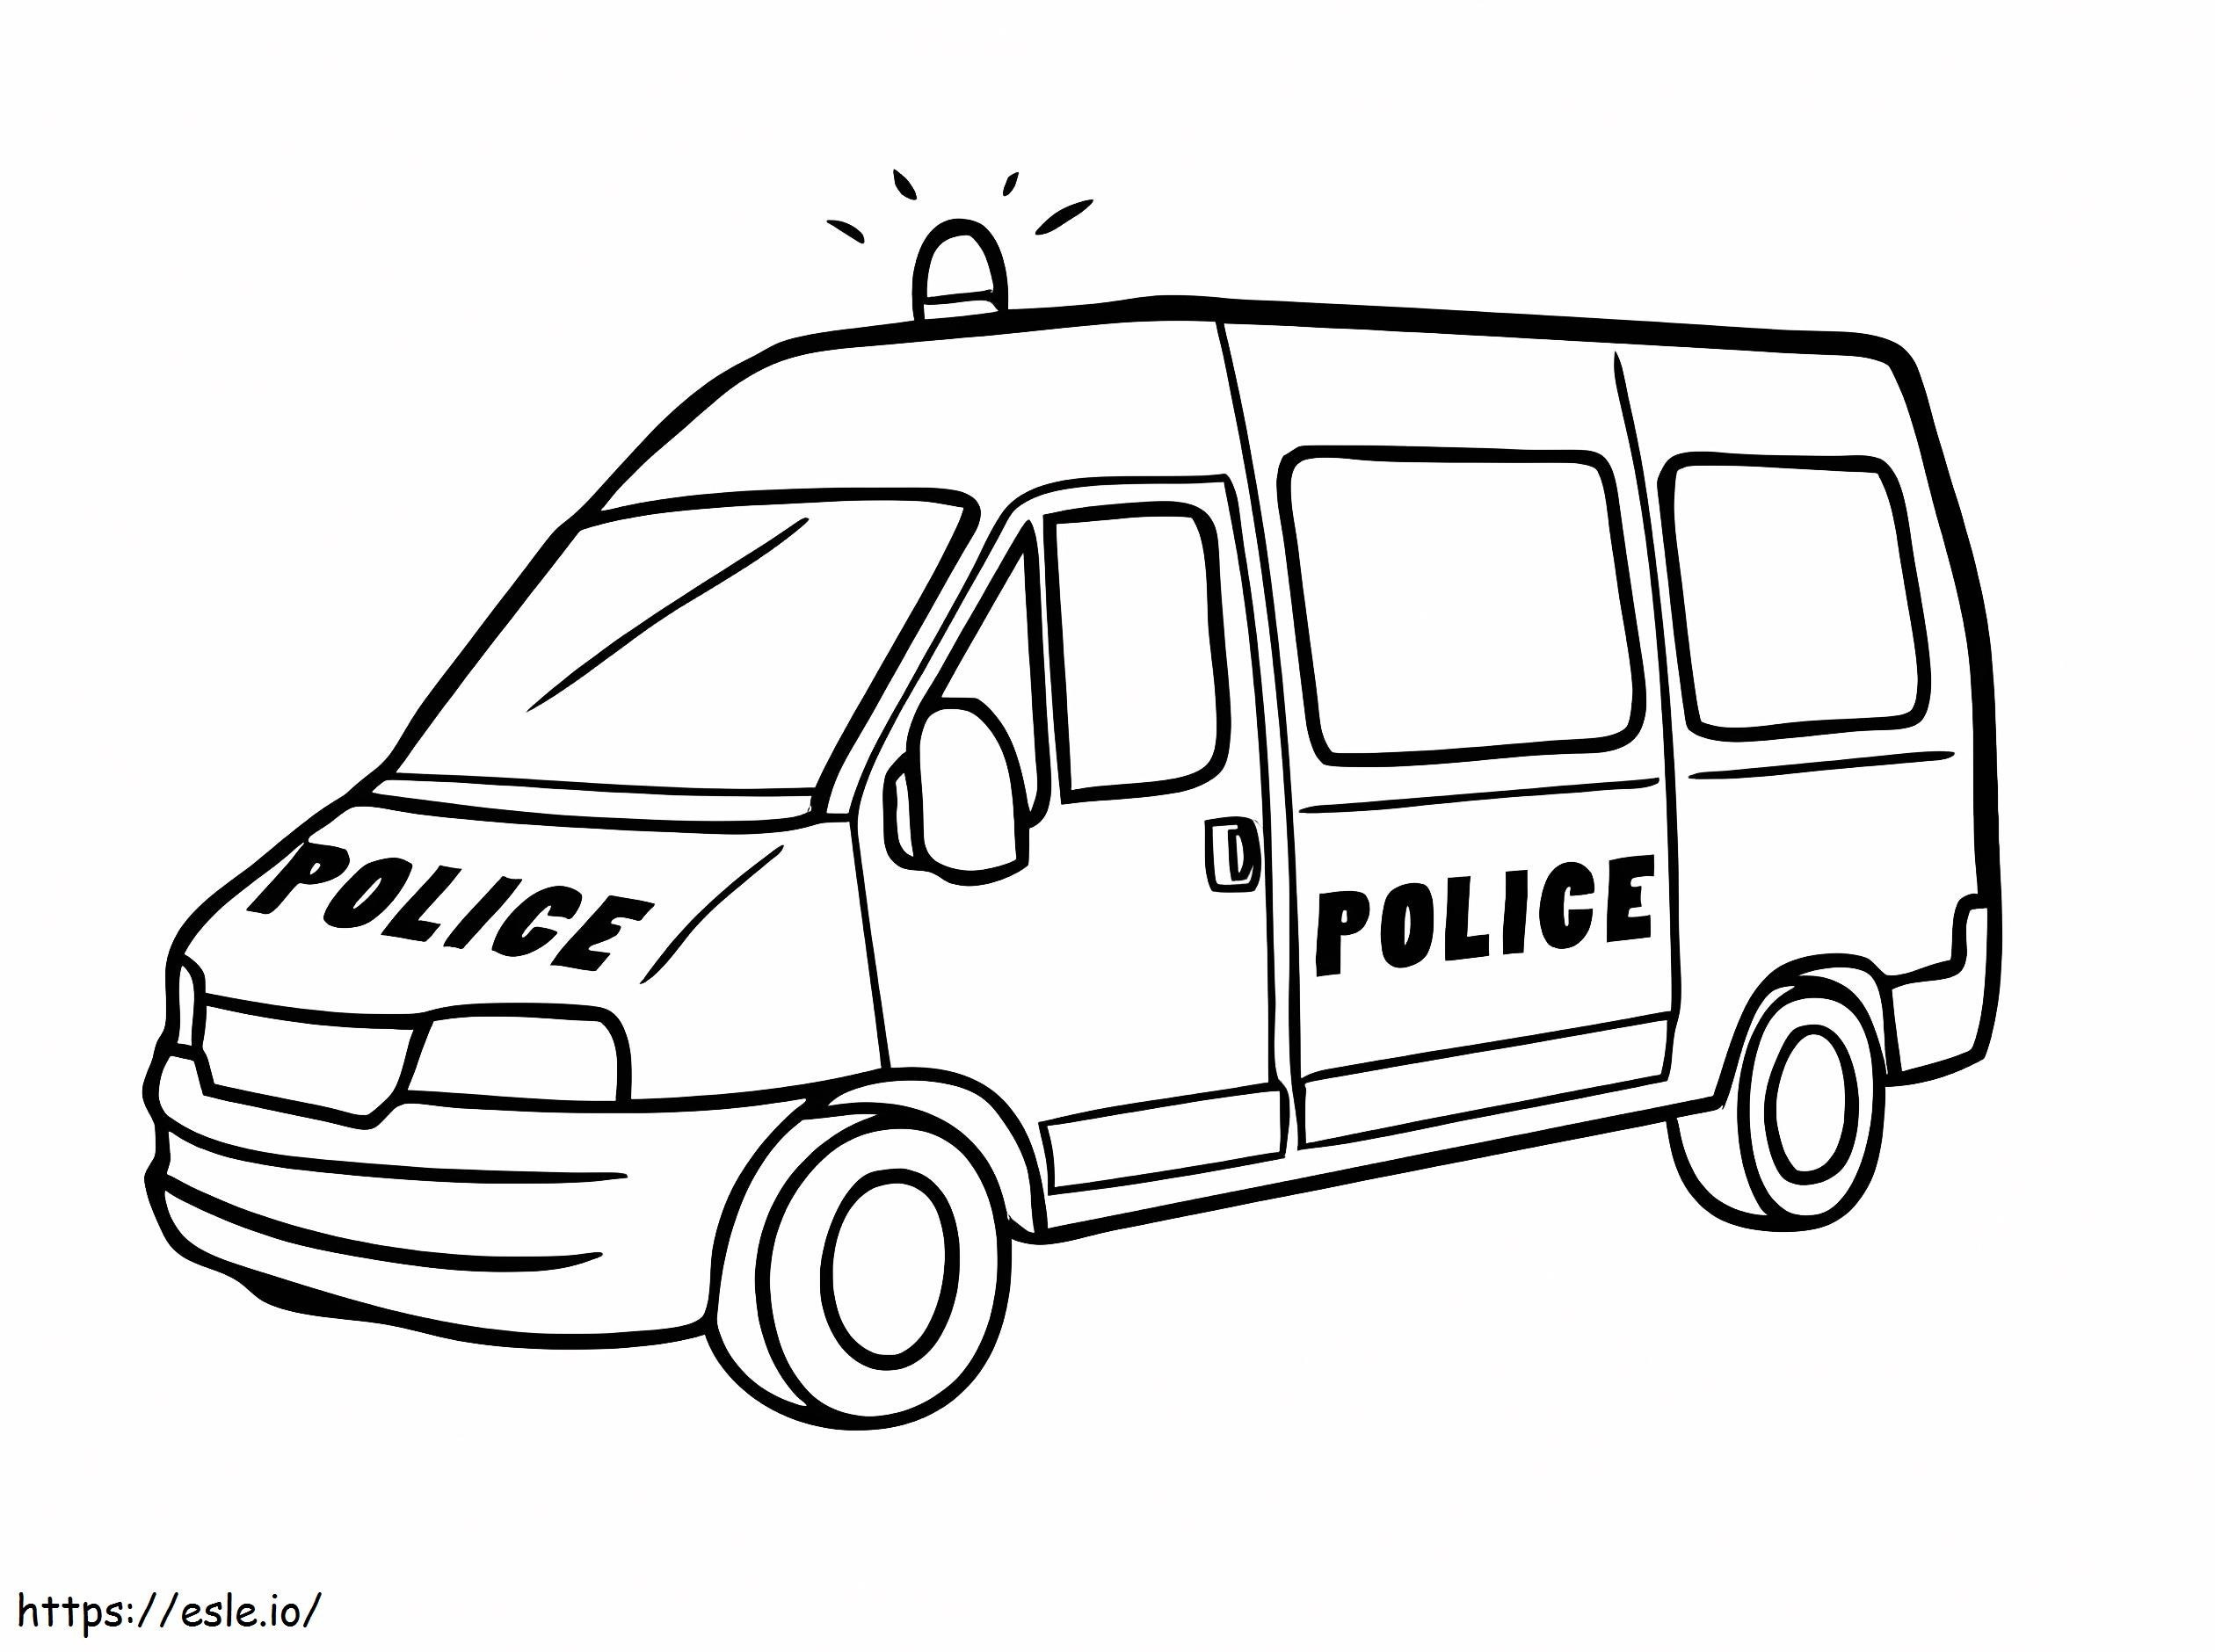 Police Van 1 coloring page